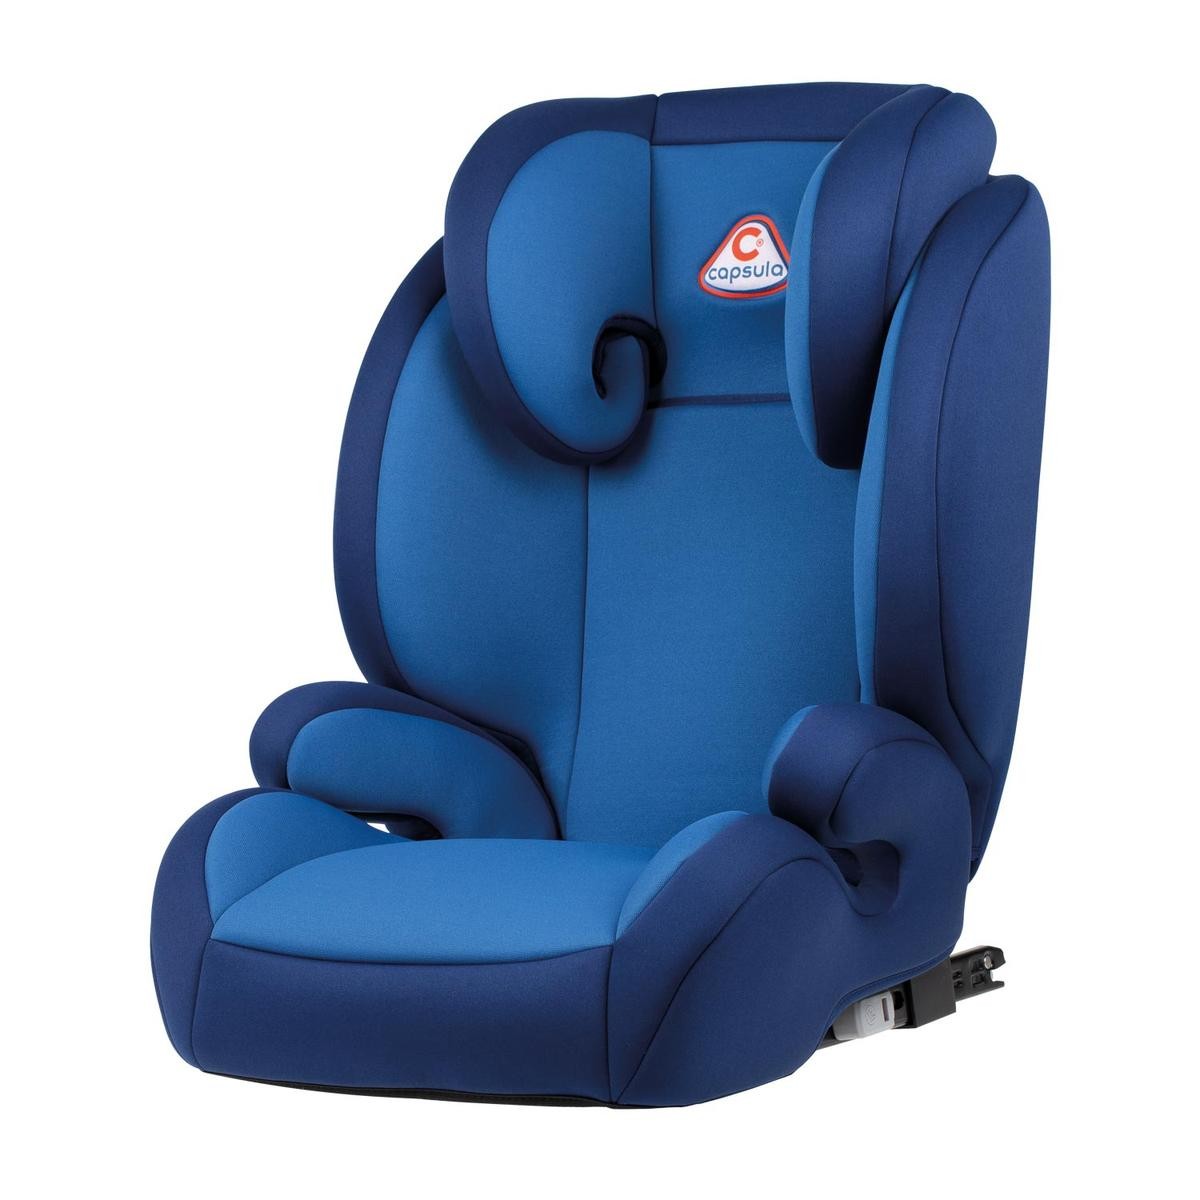 Children's car seat blue capsula MT5X 772140